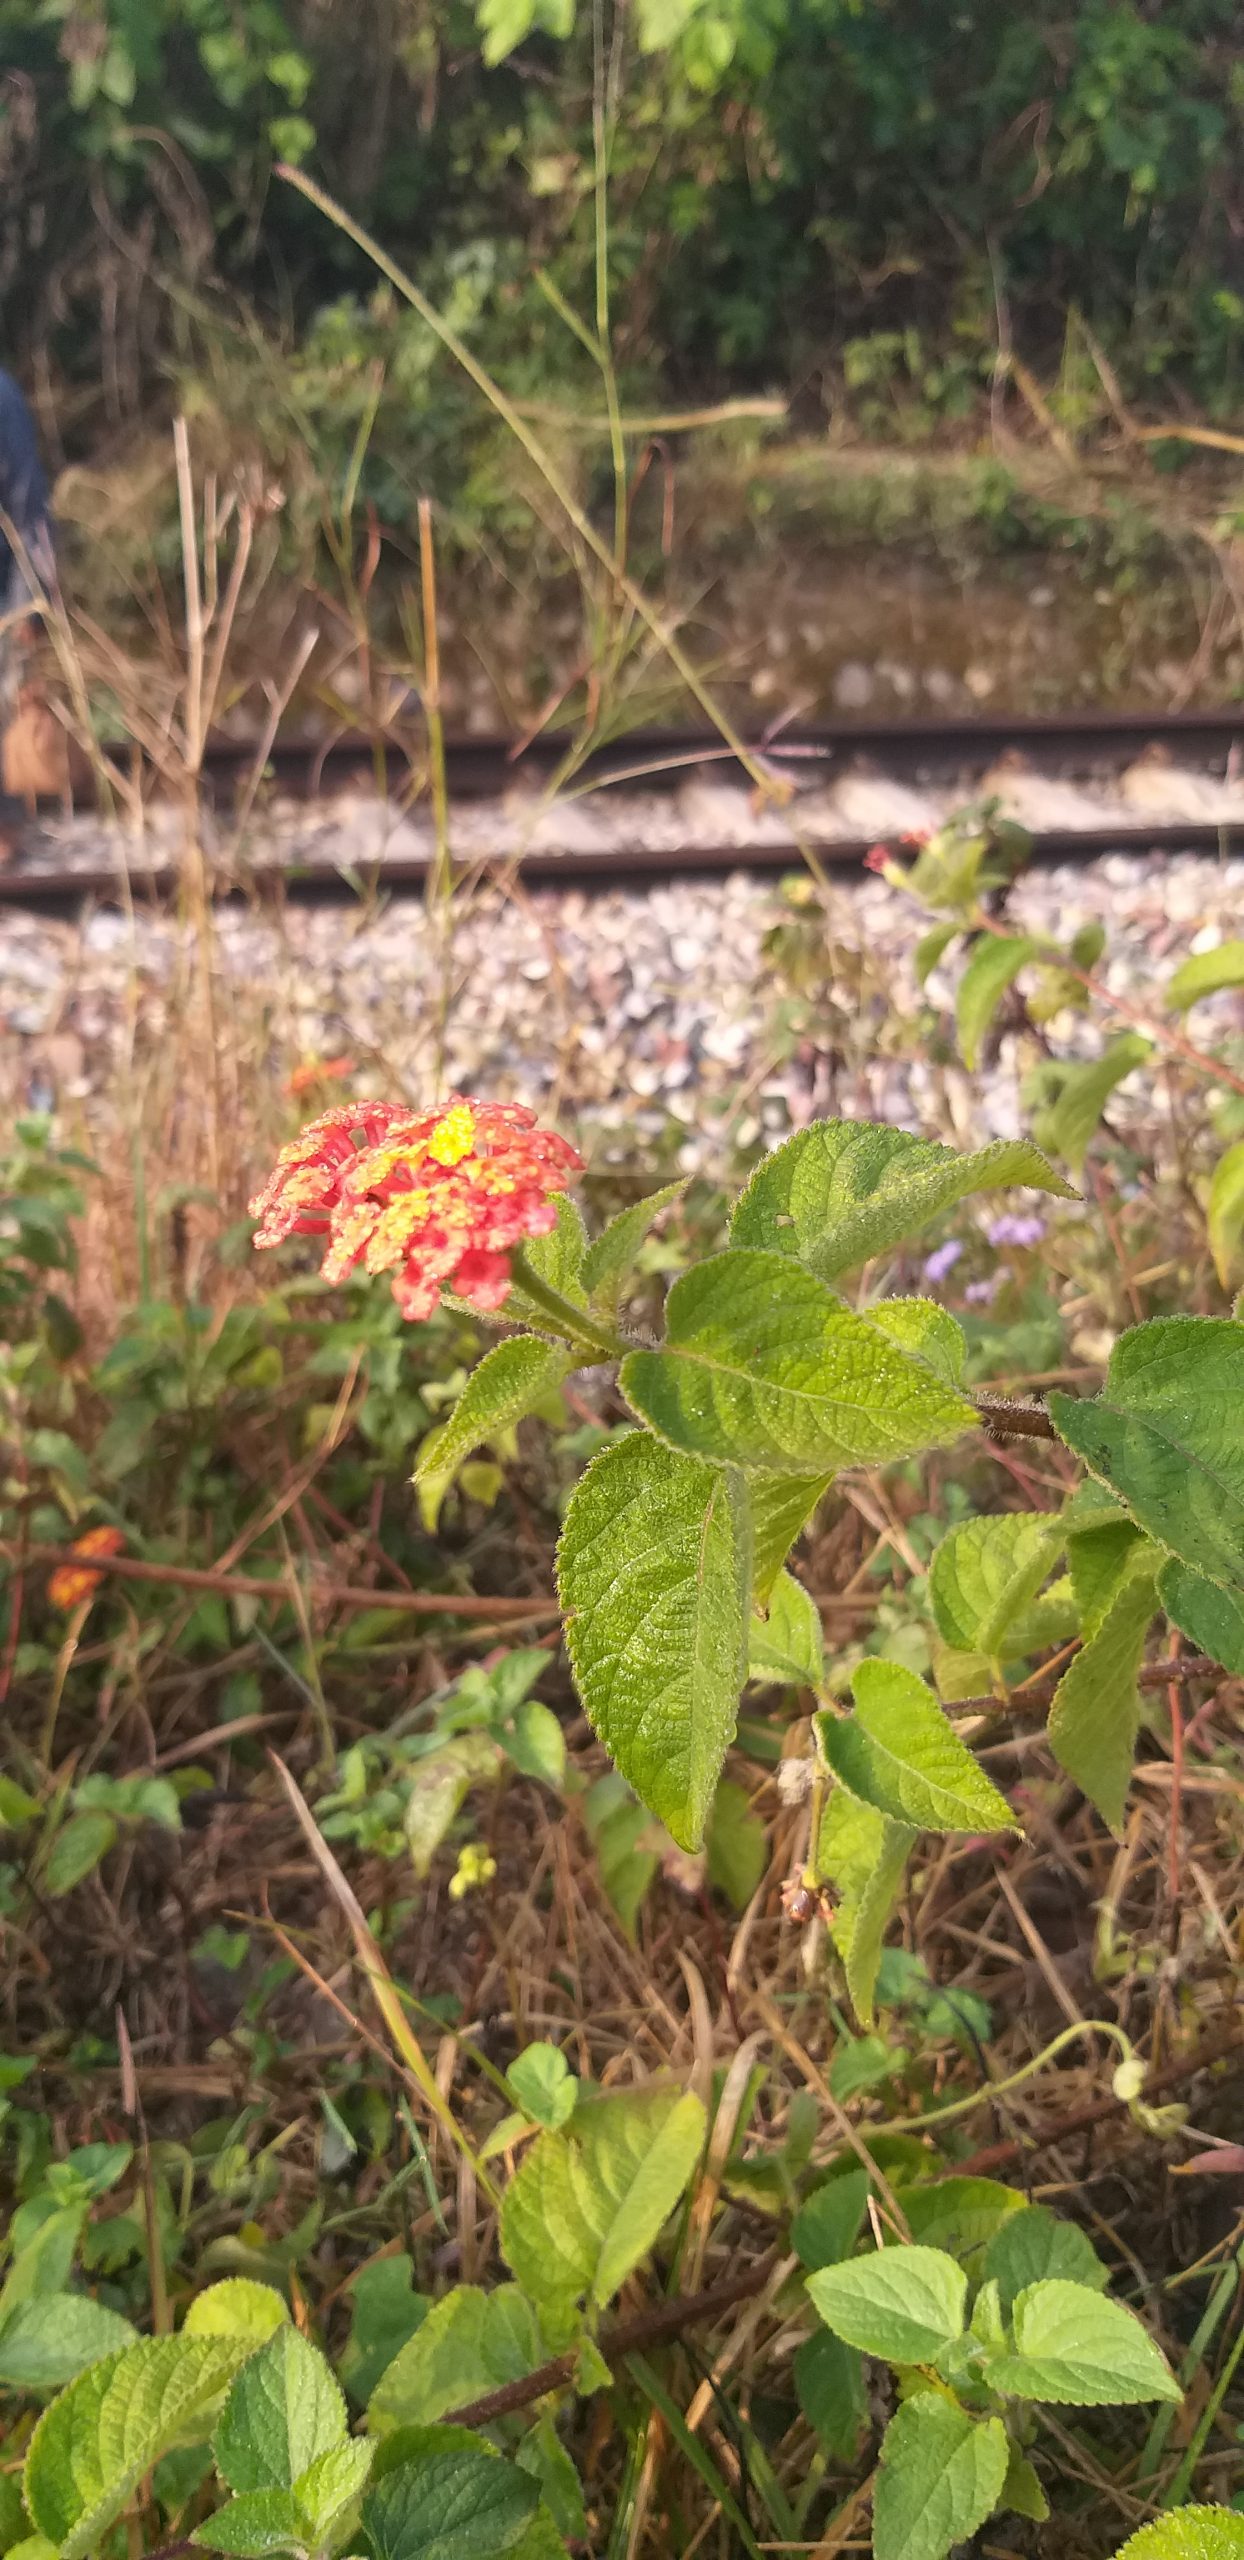 Plants near a railway track